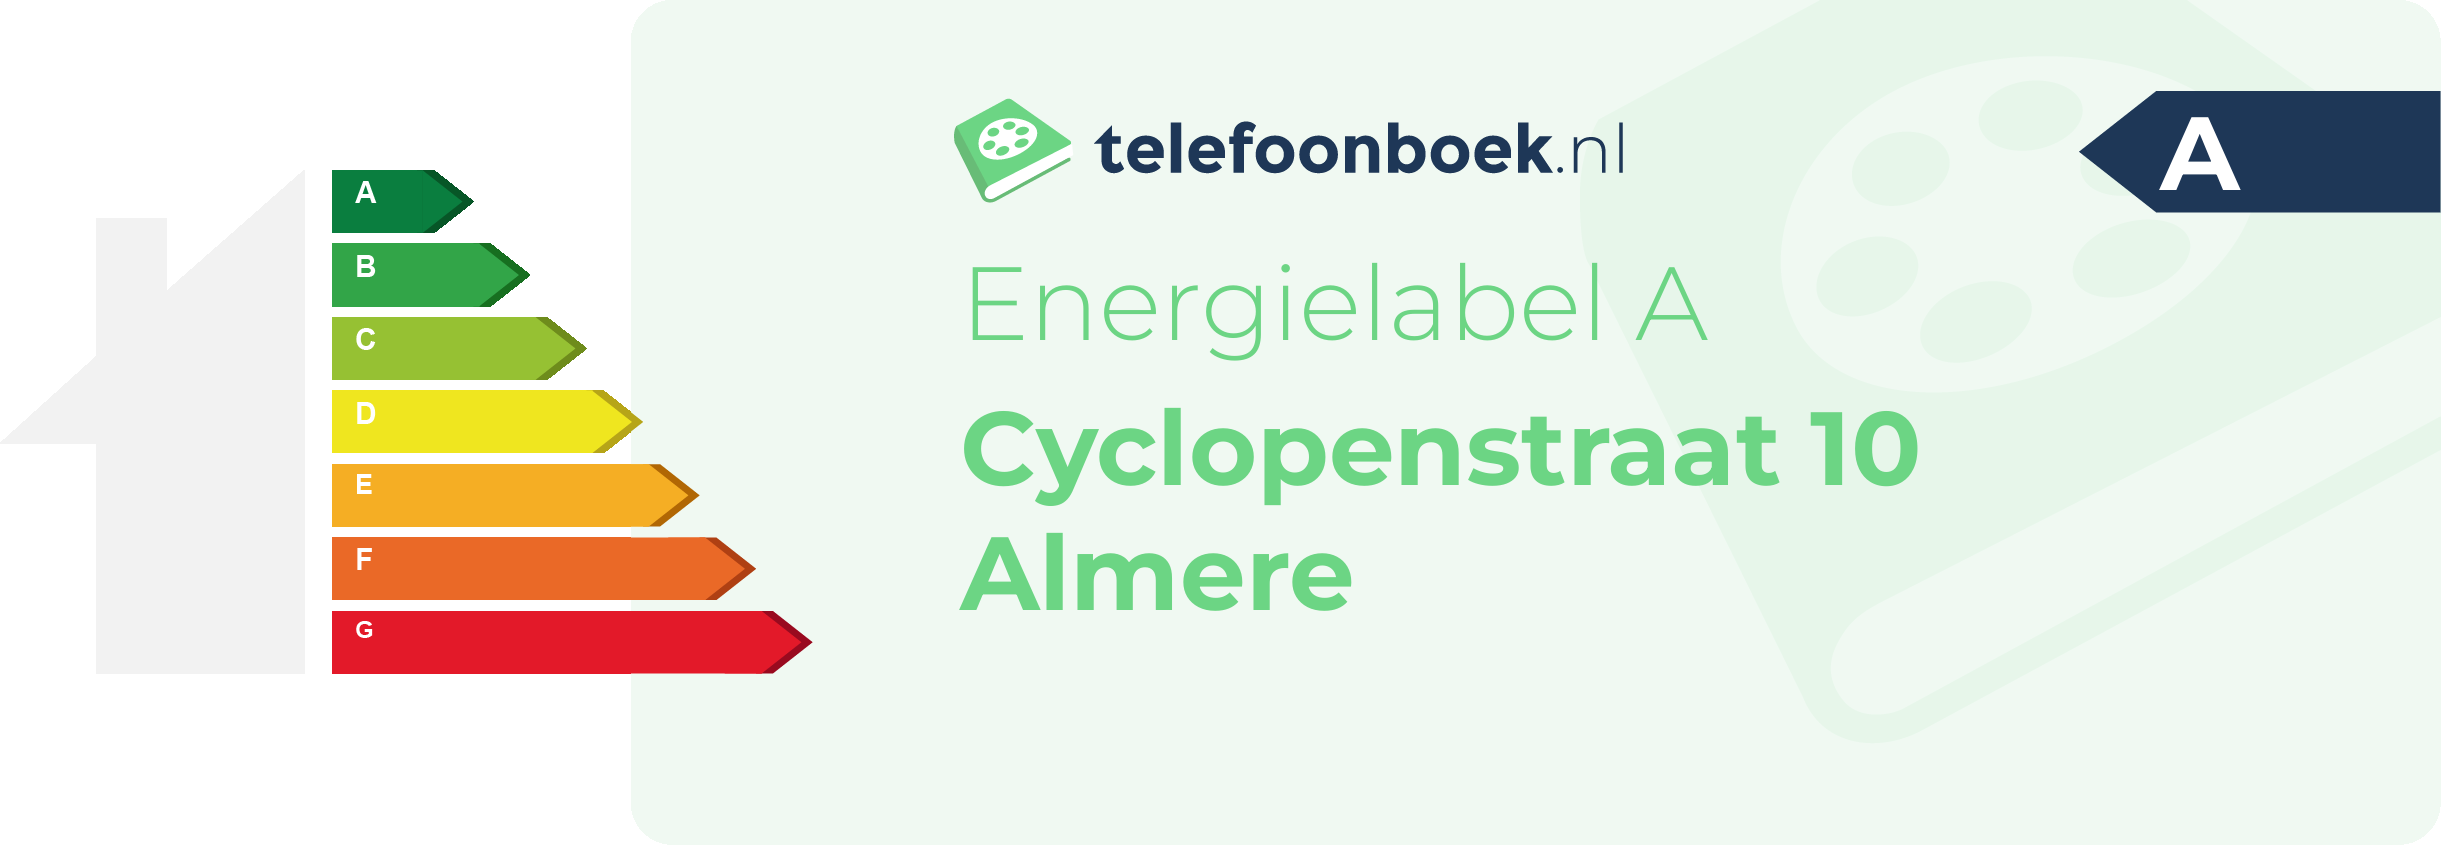 Energielabel Cyclopenstraat 10 Almere